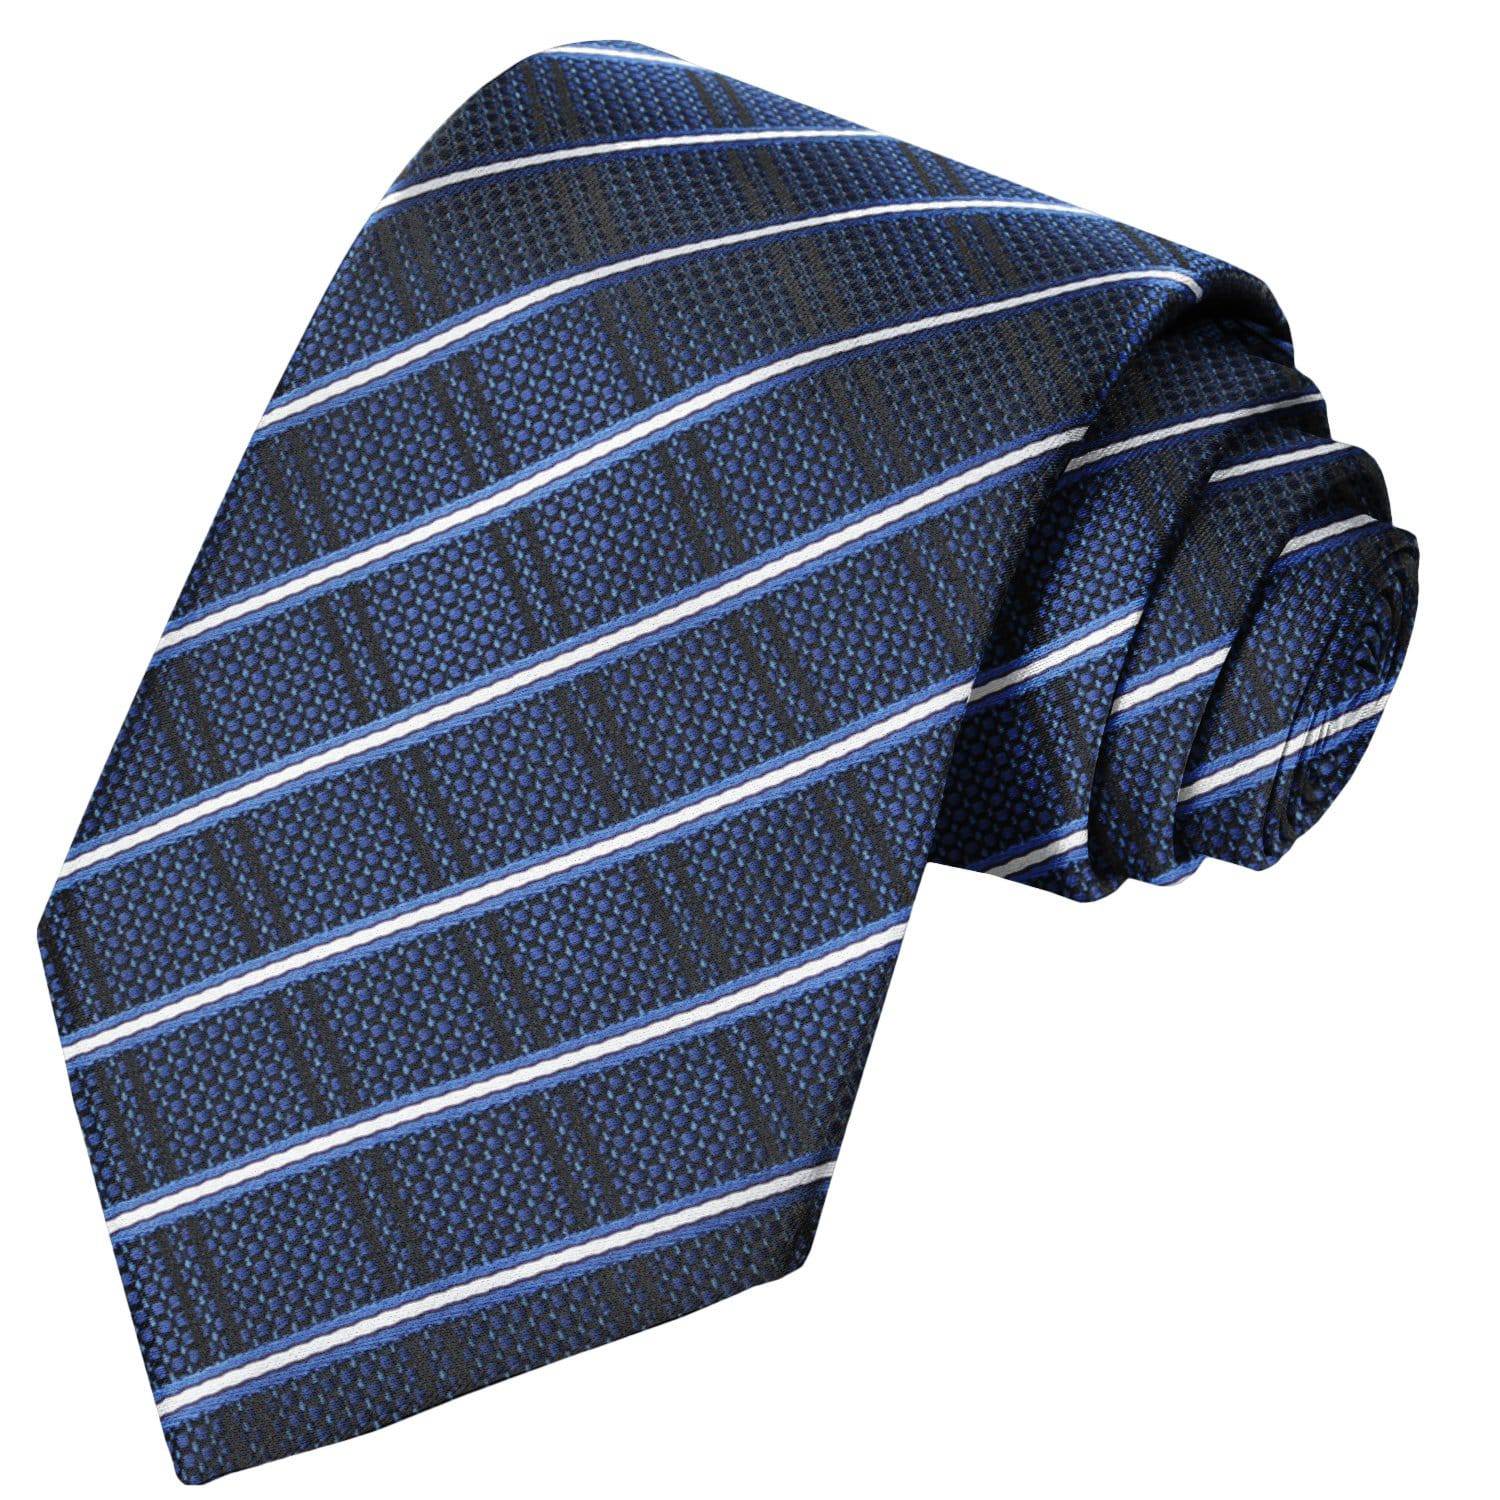 Black-White-Azure-Royal Blue Stripe Tie - Tie, bowtie, pocket square  | Kissties